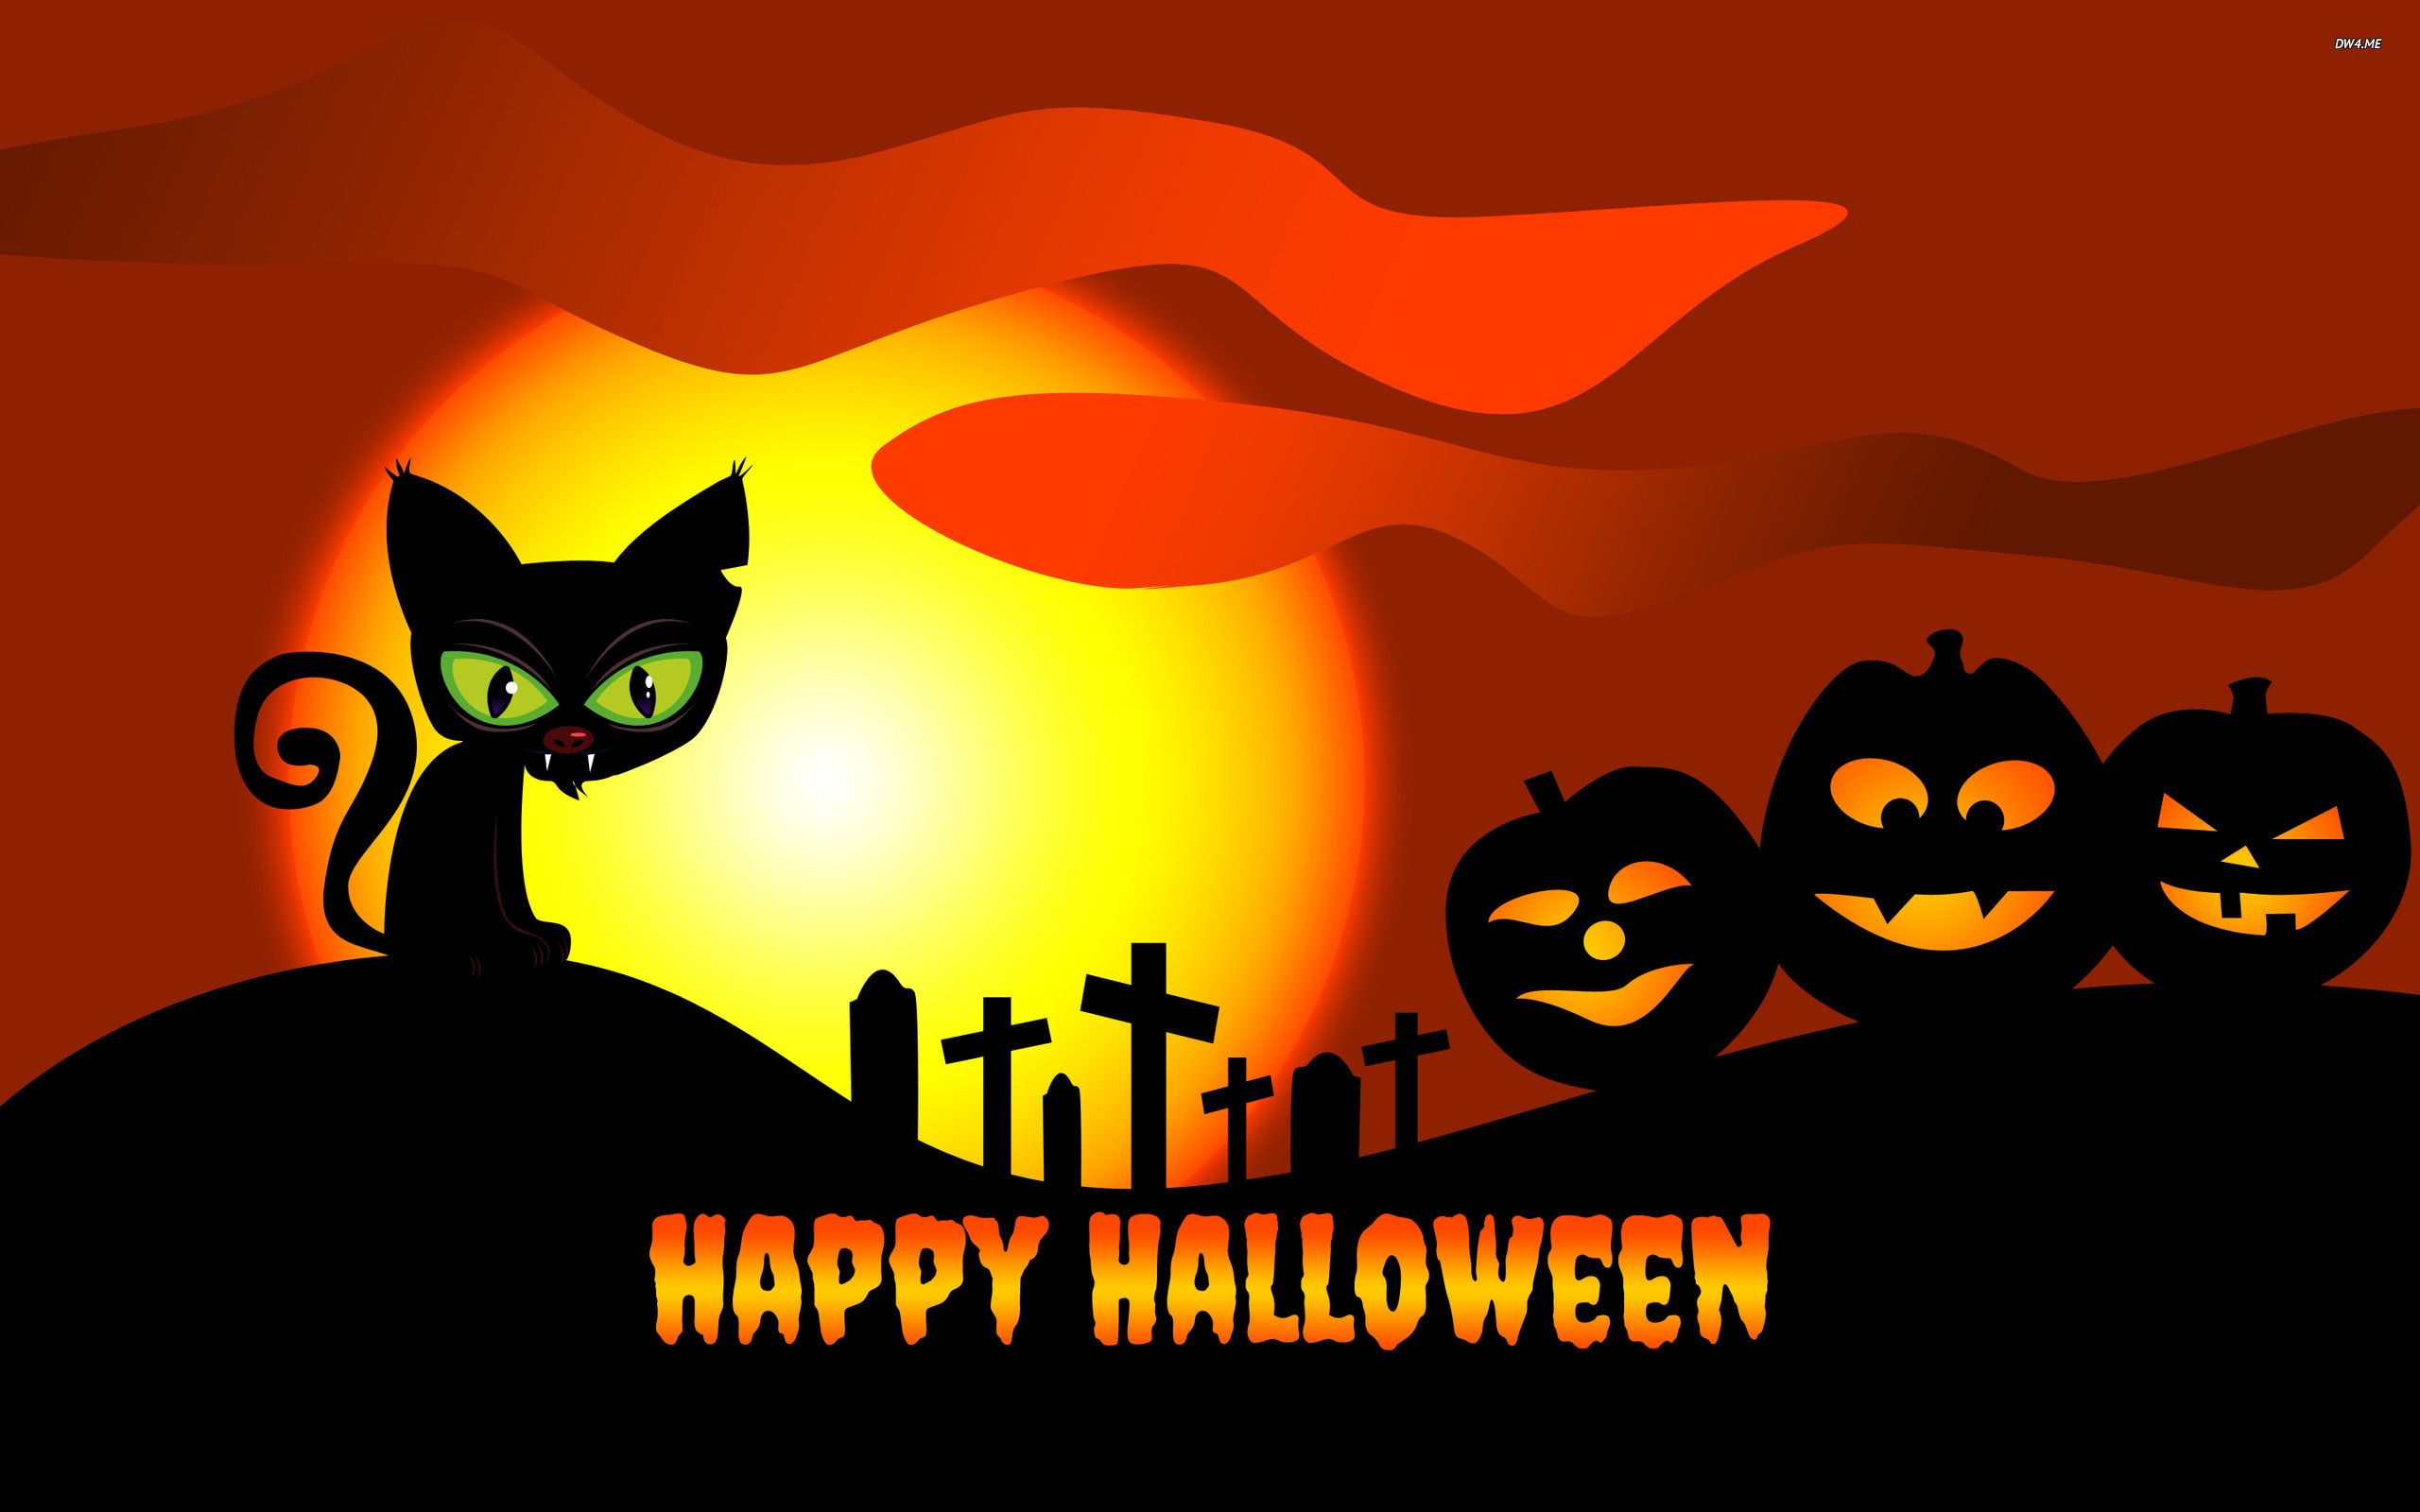 Happy Halloween Wallpaper 1080p. Hello kitty halloween wallpaper, Hello kitty halloween, Halloween image